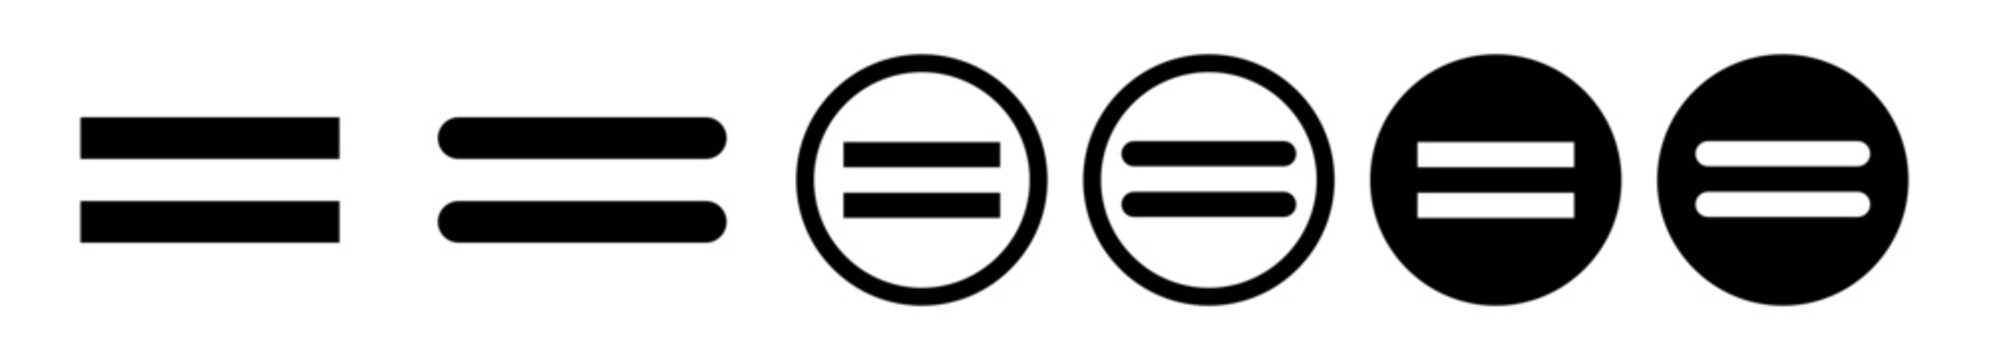 Equal sign and equal symbol